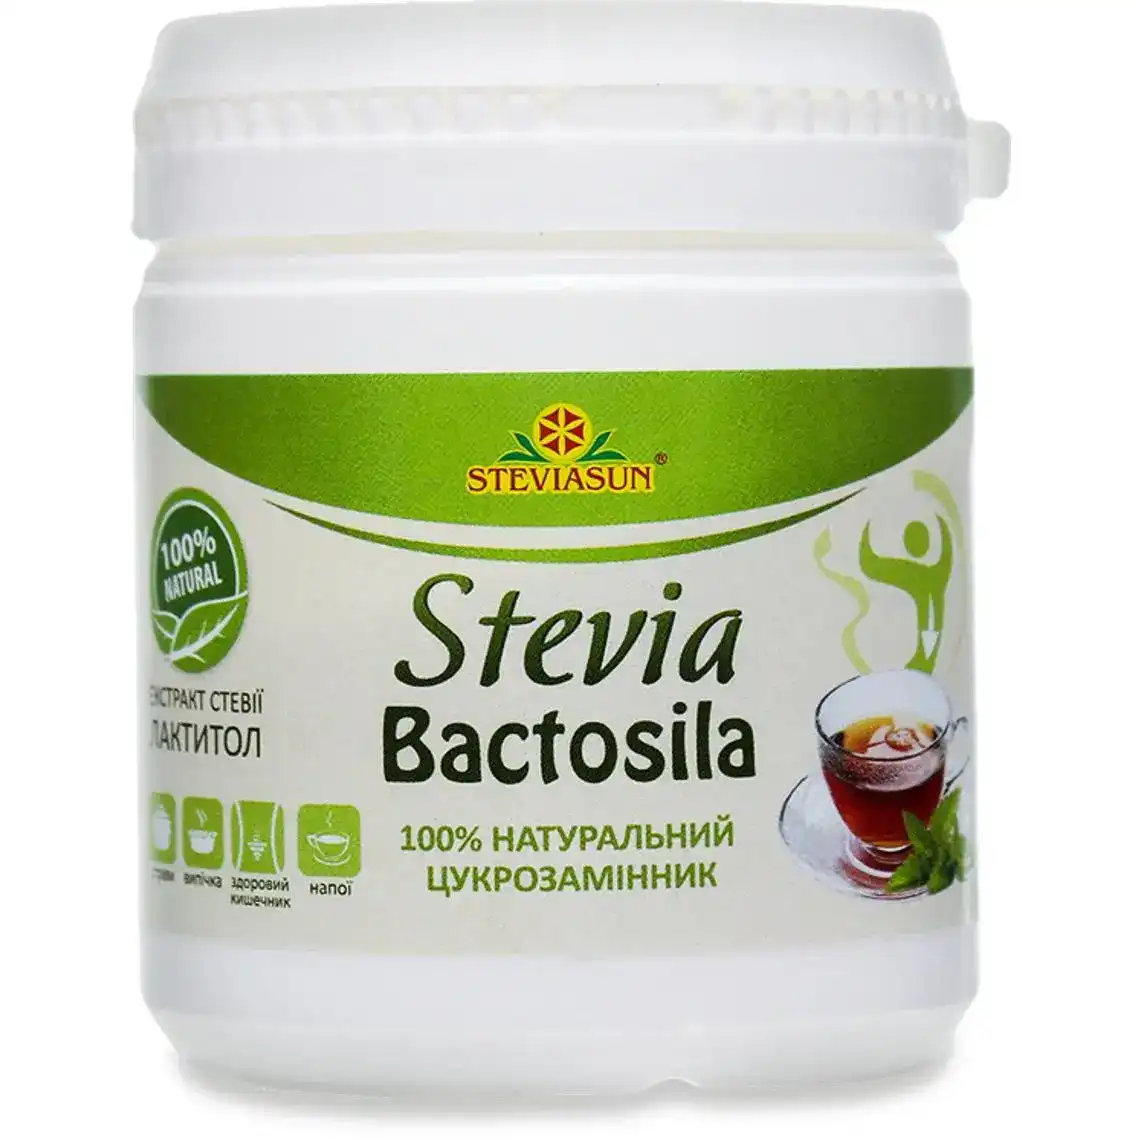 Фото 1 - Цукрозамінник натуральний Steviasun Stevia Bactosila 80 г